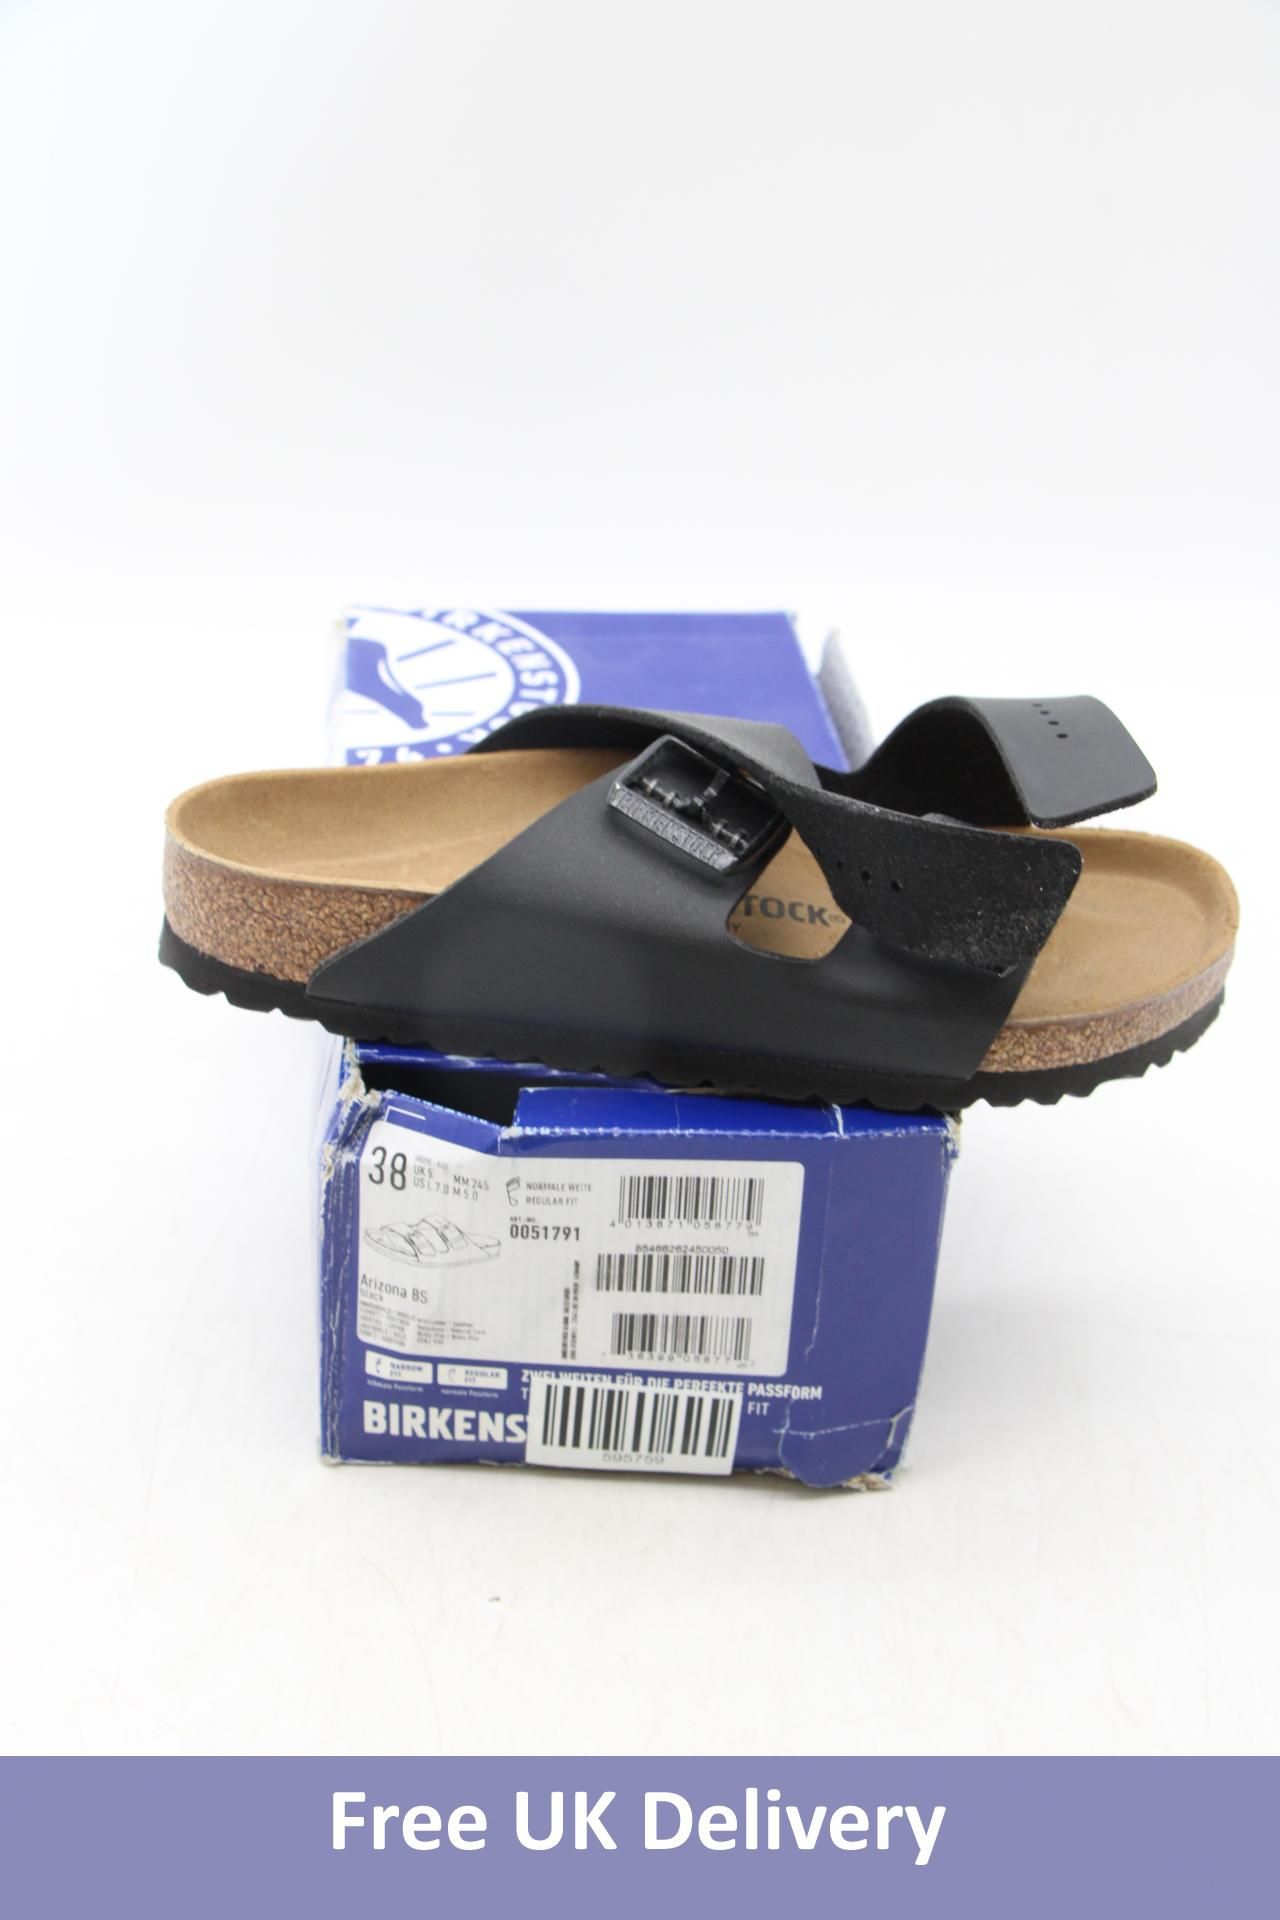 Birkenstock Arizona BS Sandals, Black, UK 5. Box damaged